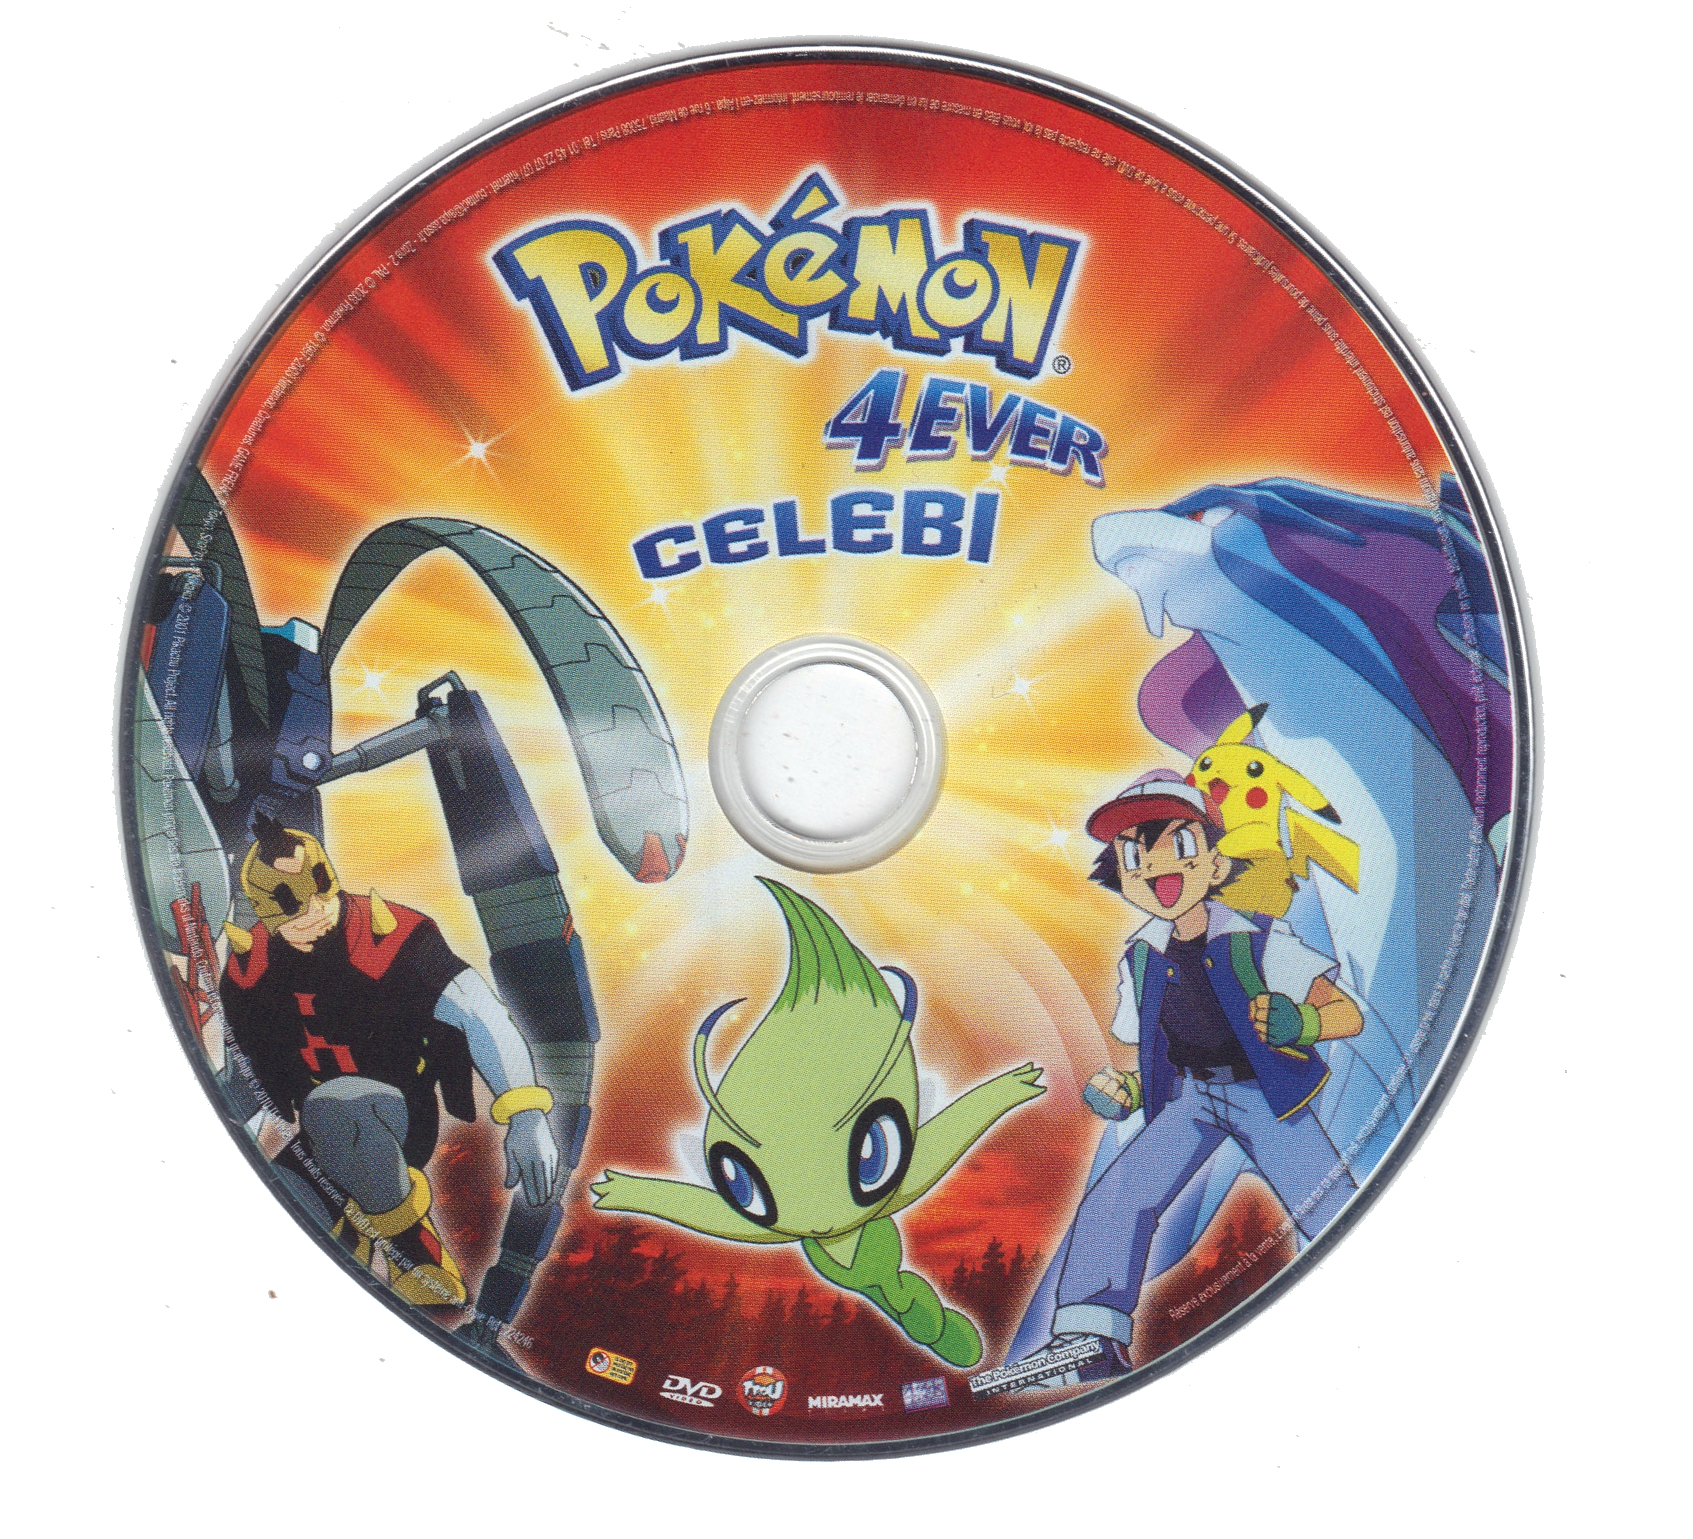 Pokemon 4ever - Celebi